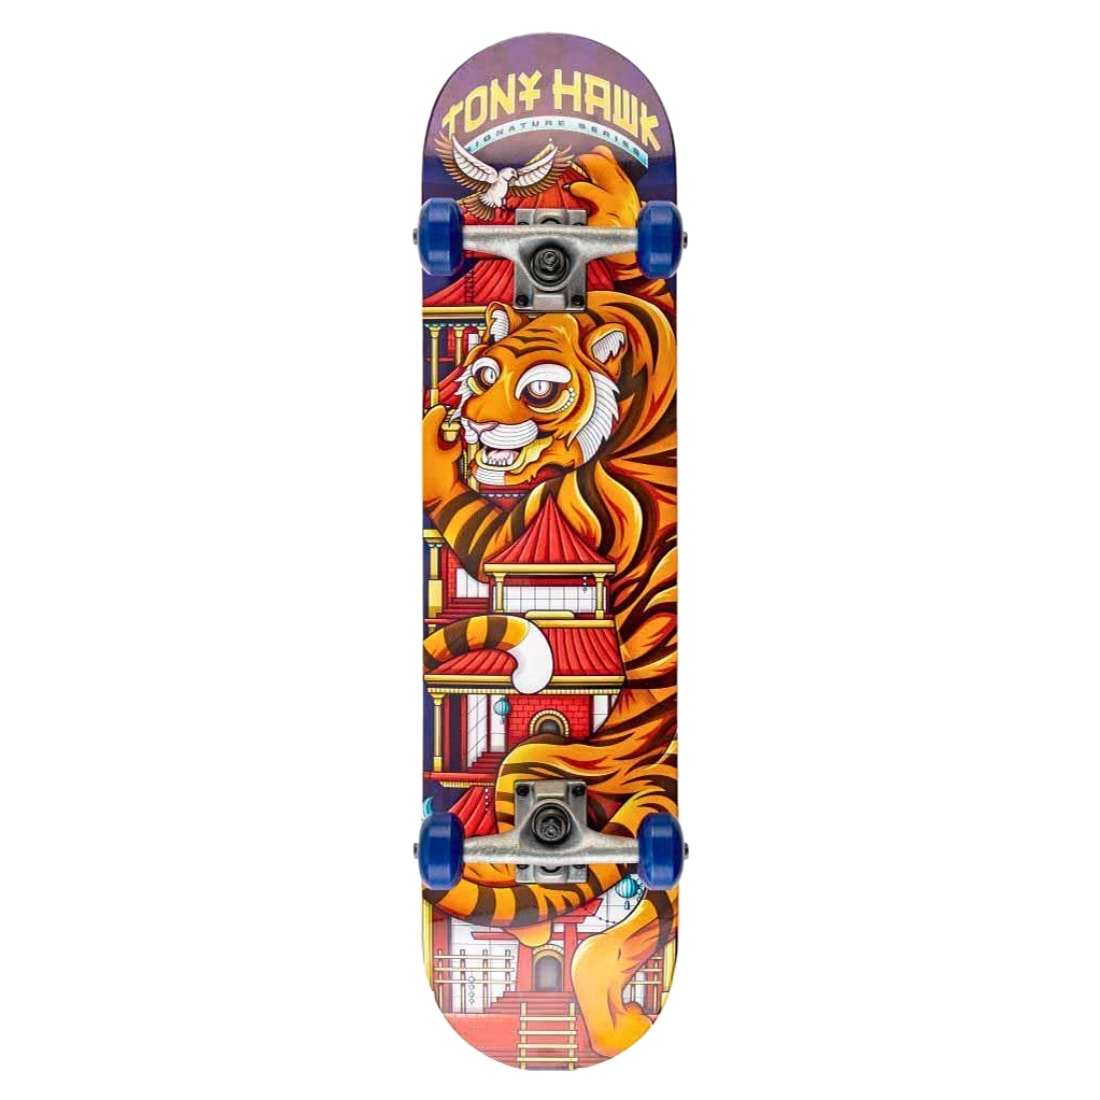 Birdhouse 7.5" Tiger Palace 180 Complete Skateboard - Multi - Complete Skateboard by Birdhouse 7.5 inch